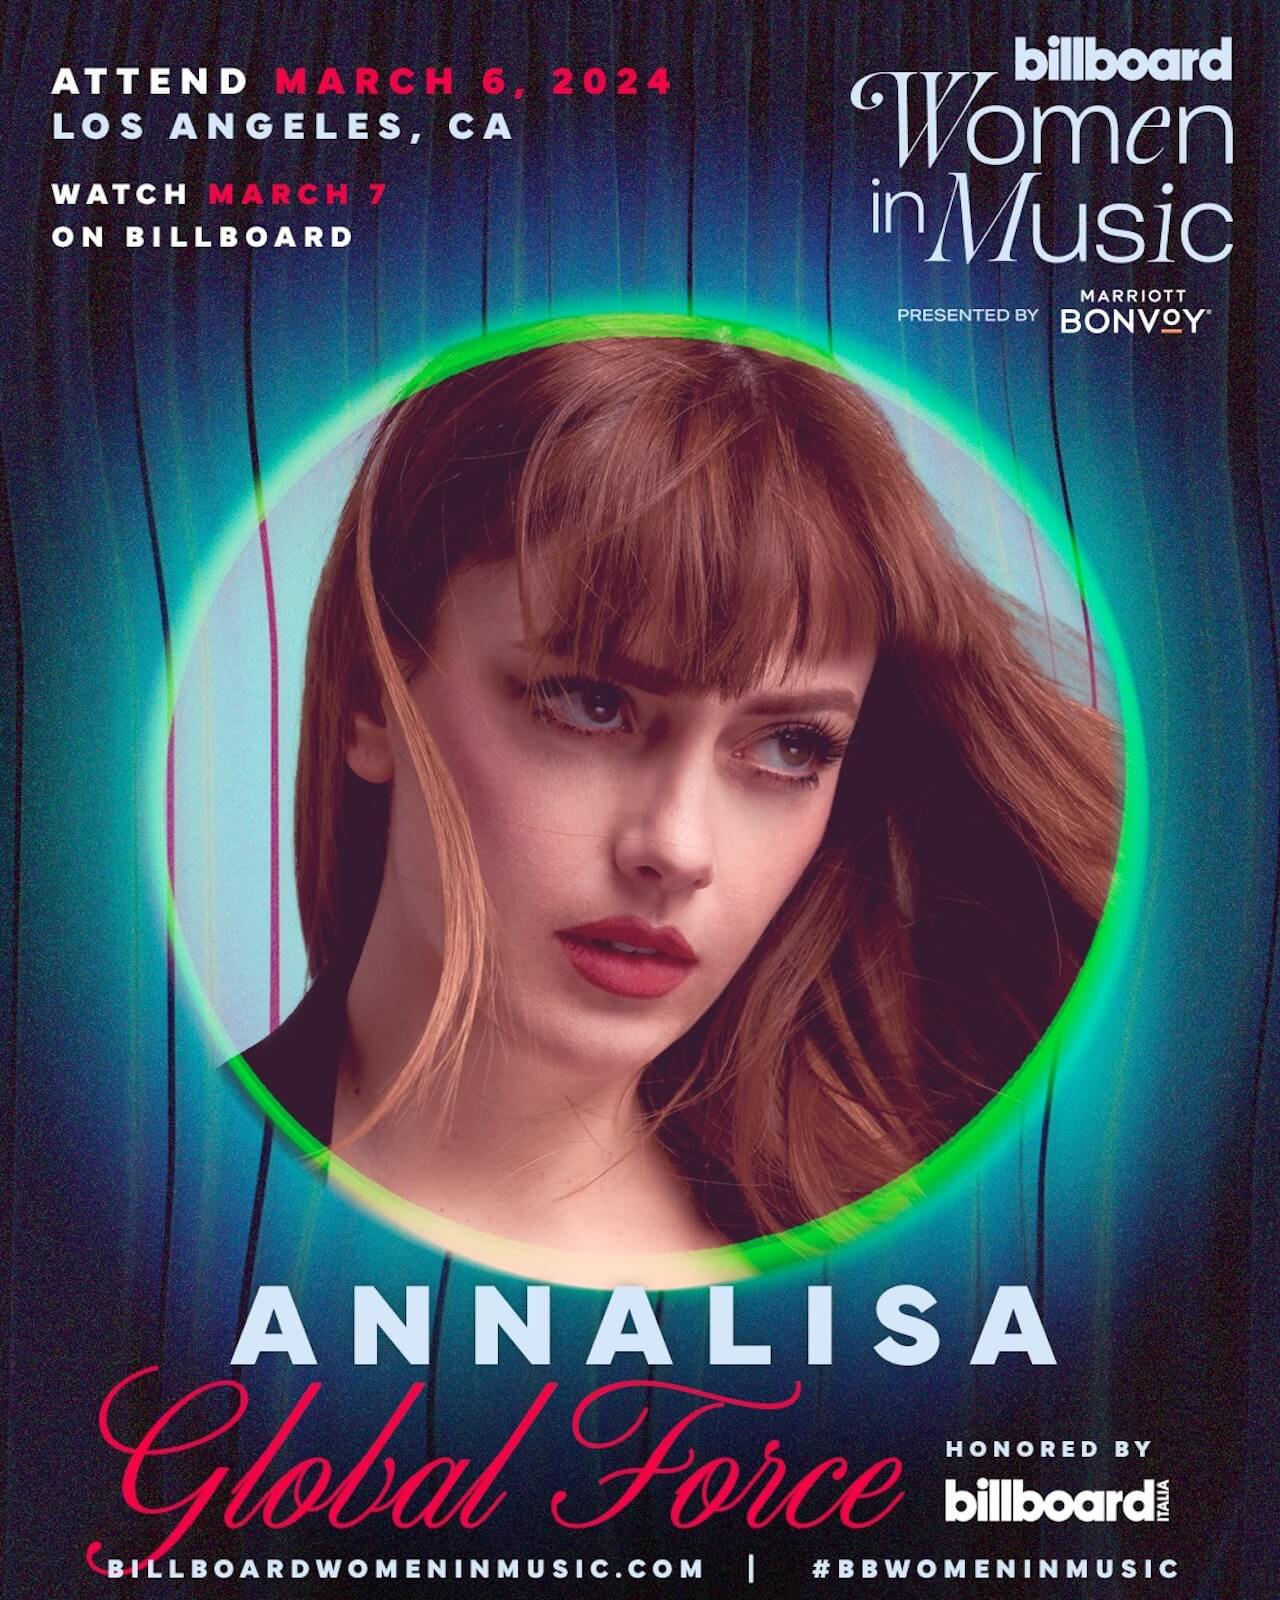 Annalisa vola a Los Angeles per il Premio “Global Force” Billboard Women in Music - Annalisa vola a Los Angeles per il Premio Global Force Billboard Women in Music - Gay.it